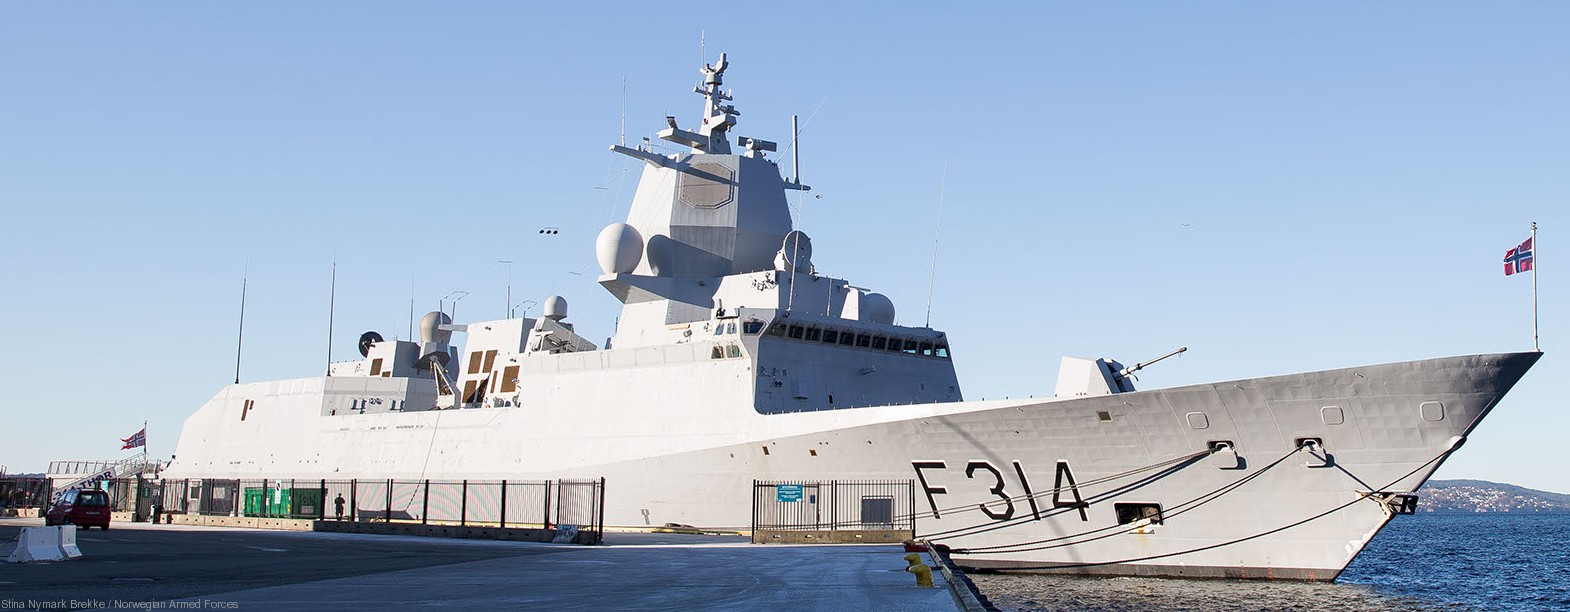 f-314 thor heyerdahl hnoms knm fridtjof nansen class frigate royal norwegian navy 29